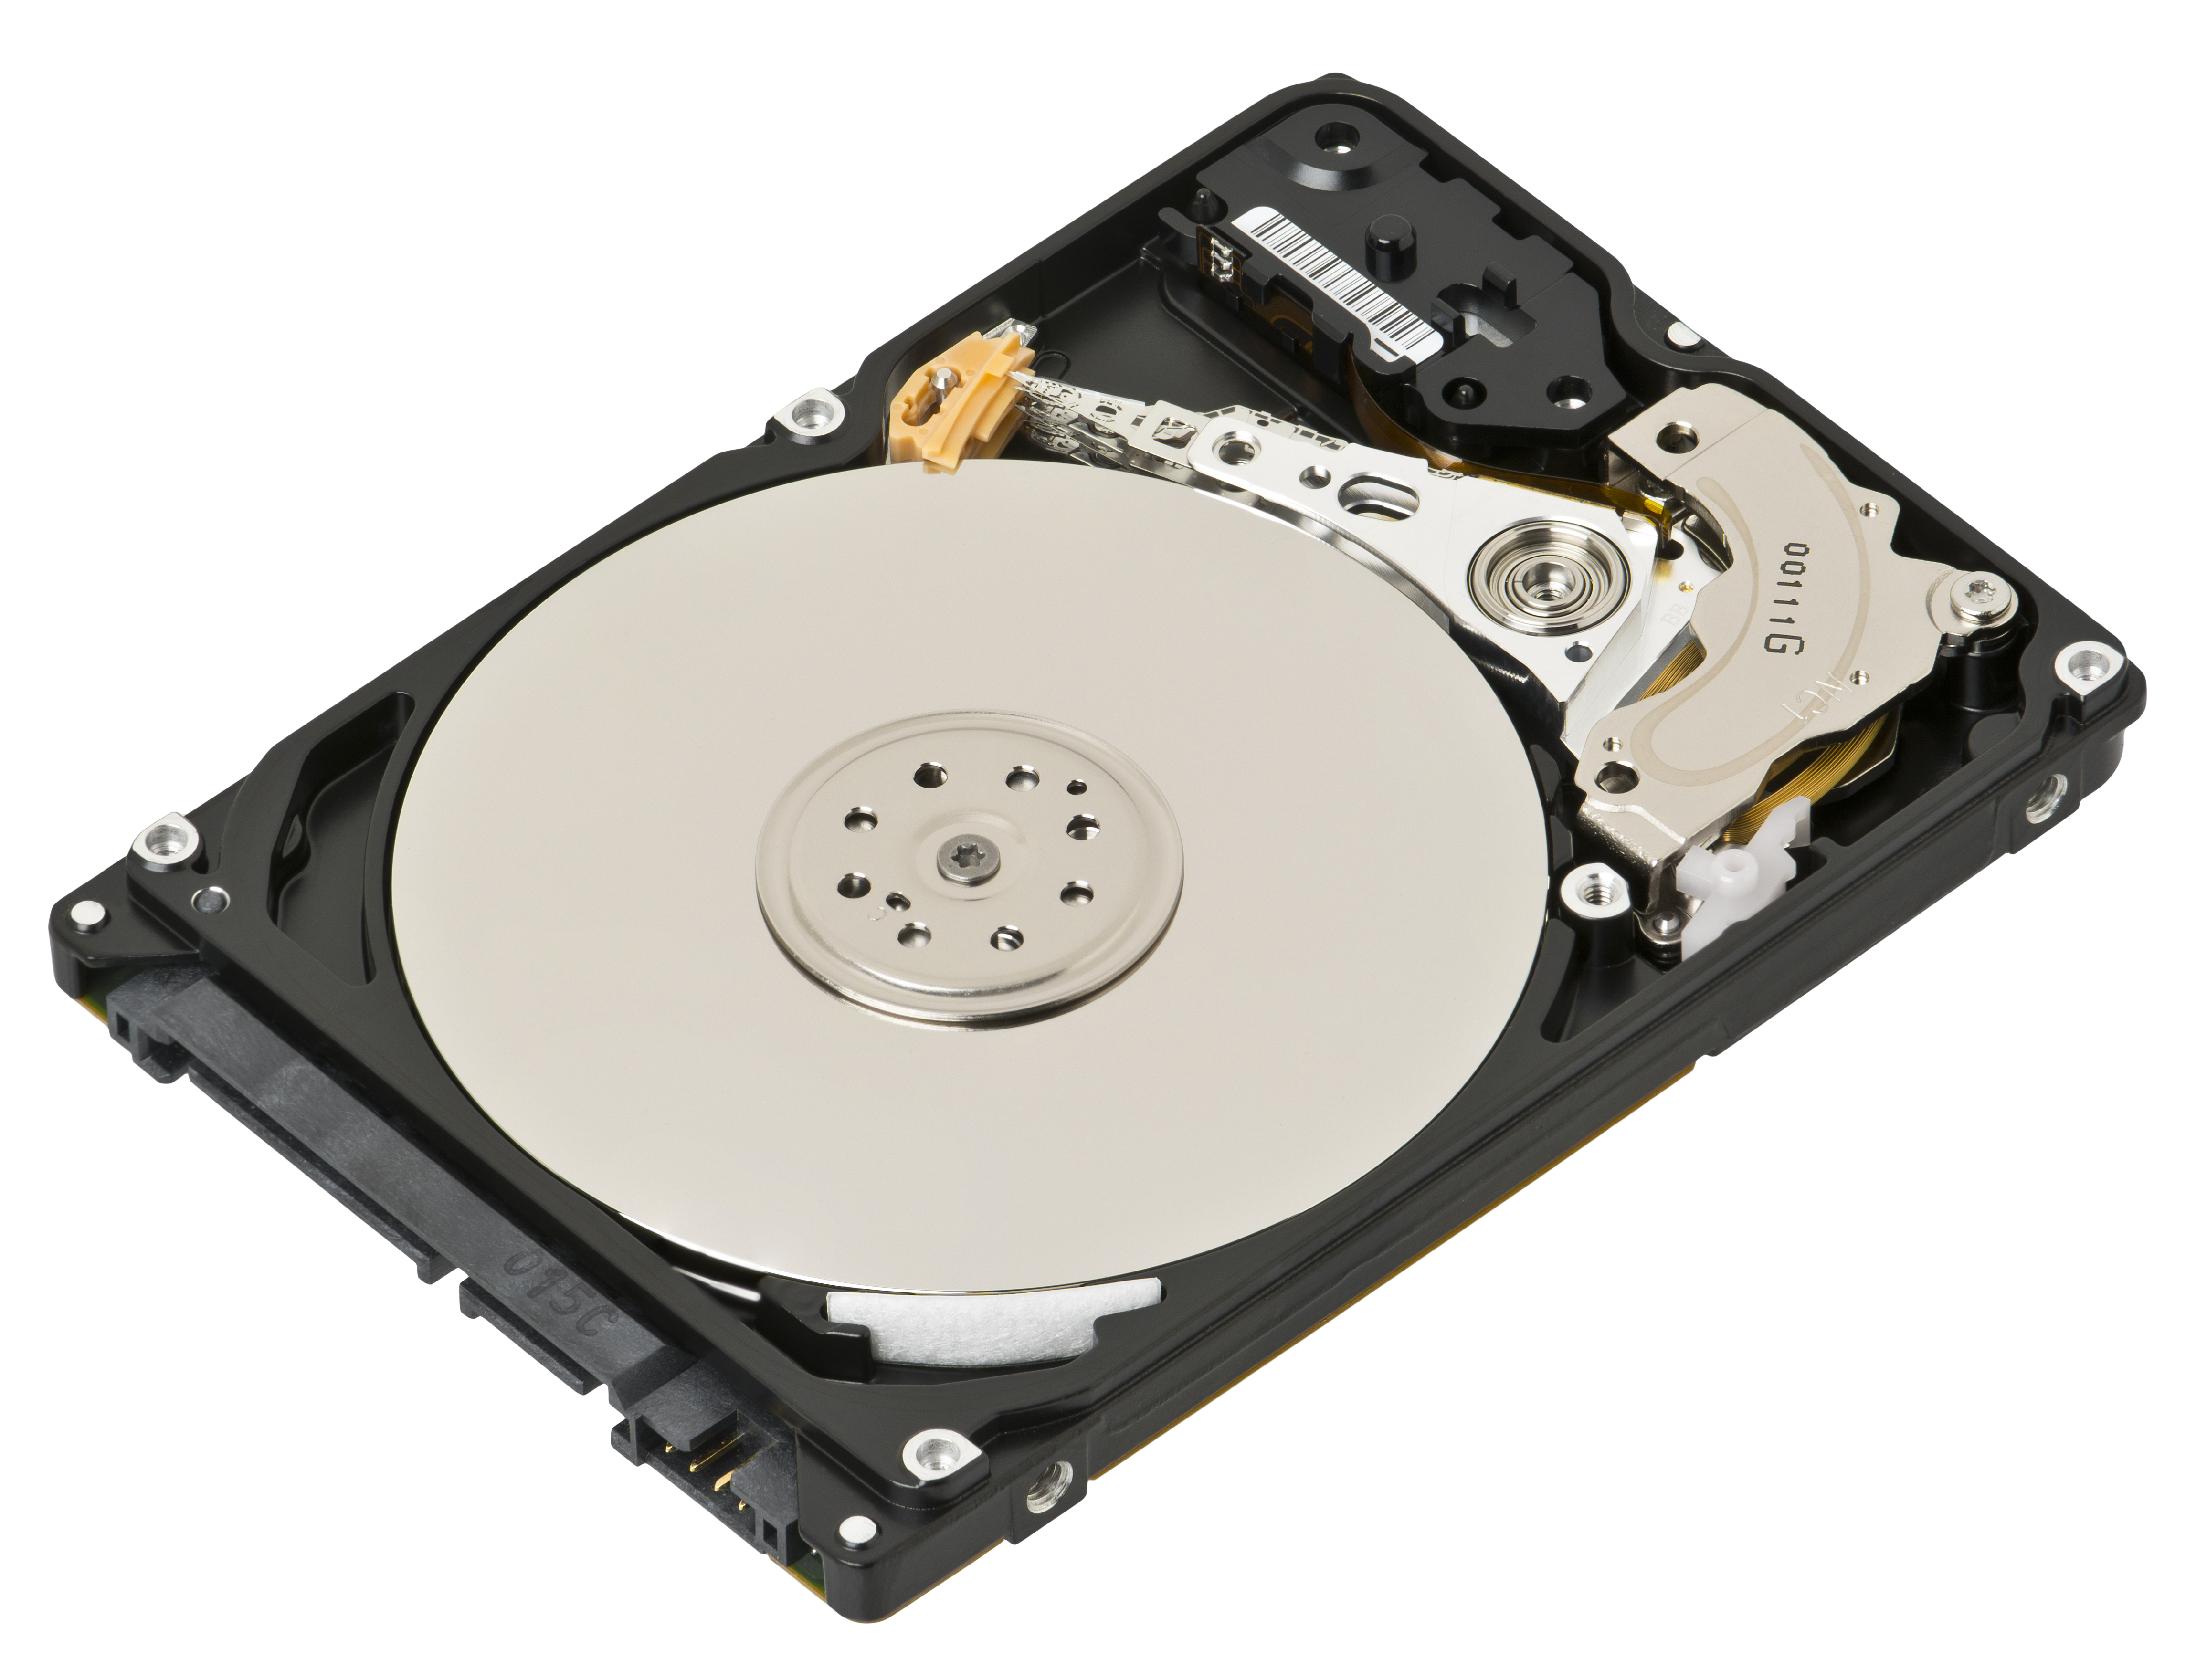 5187-2137 HP hard disk drive 160GB IDE 3.5 inch 7200RPM